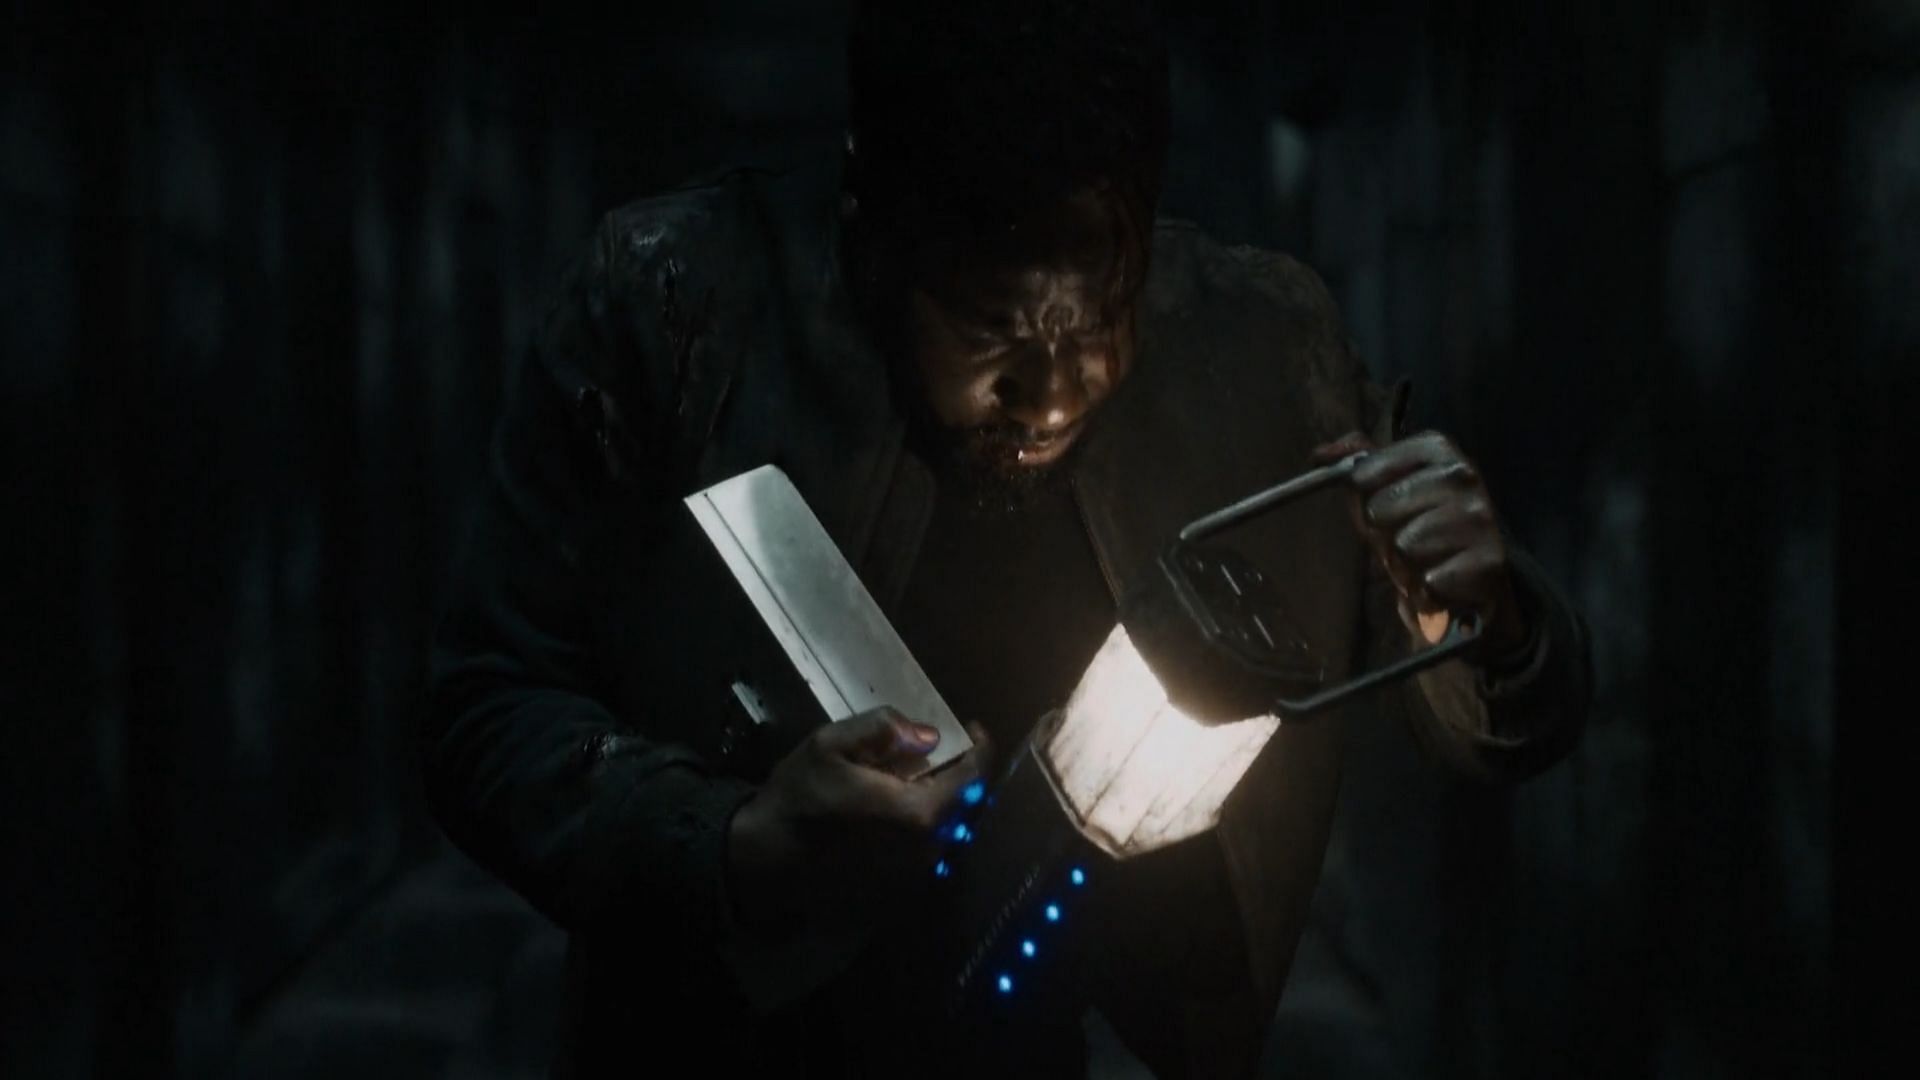 Leighton 2 struggling inside the Box, as seen in Dark Matter episode 4 (Image via Apple TV+)